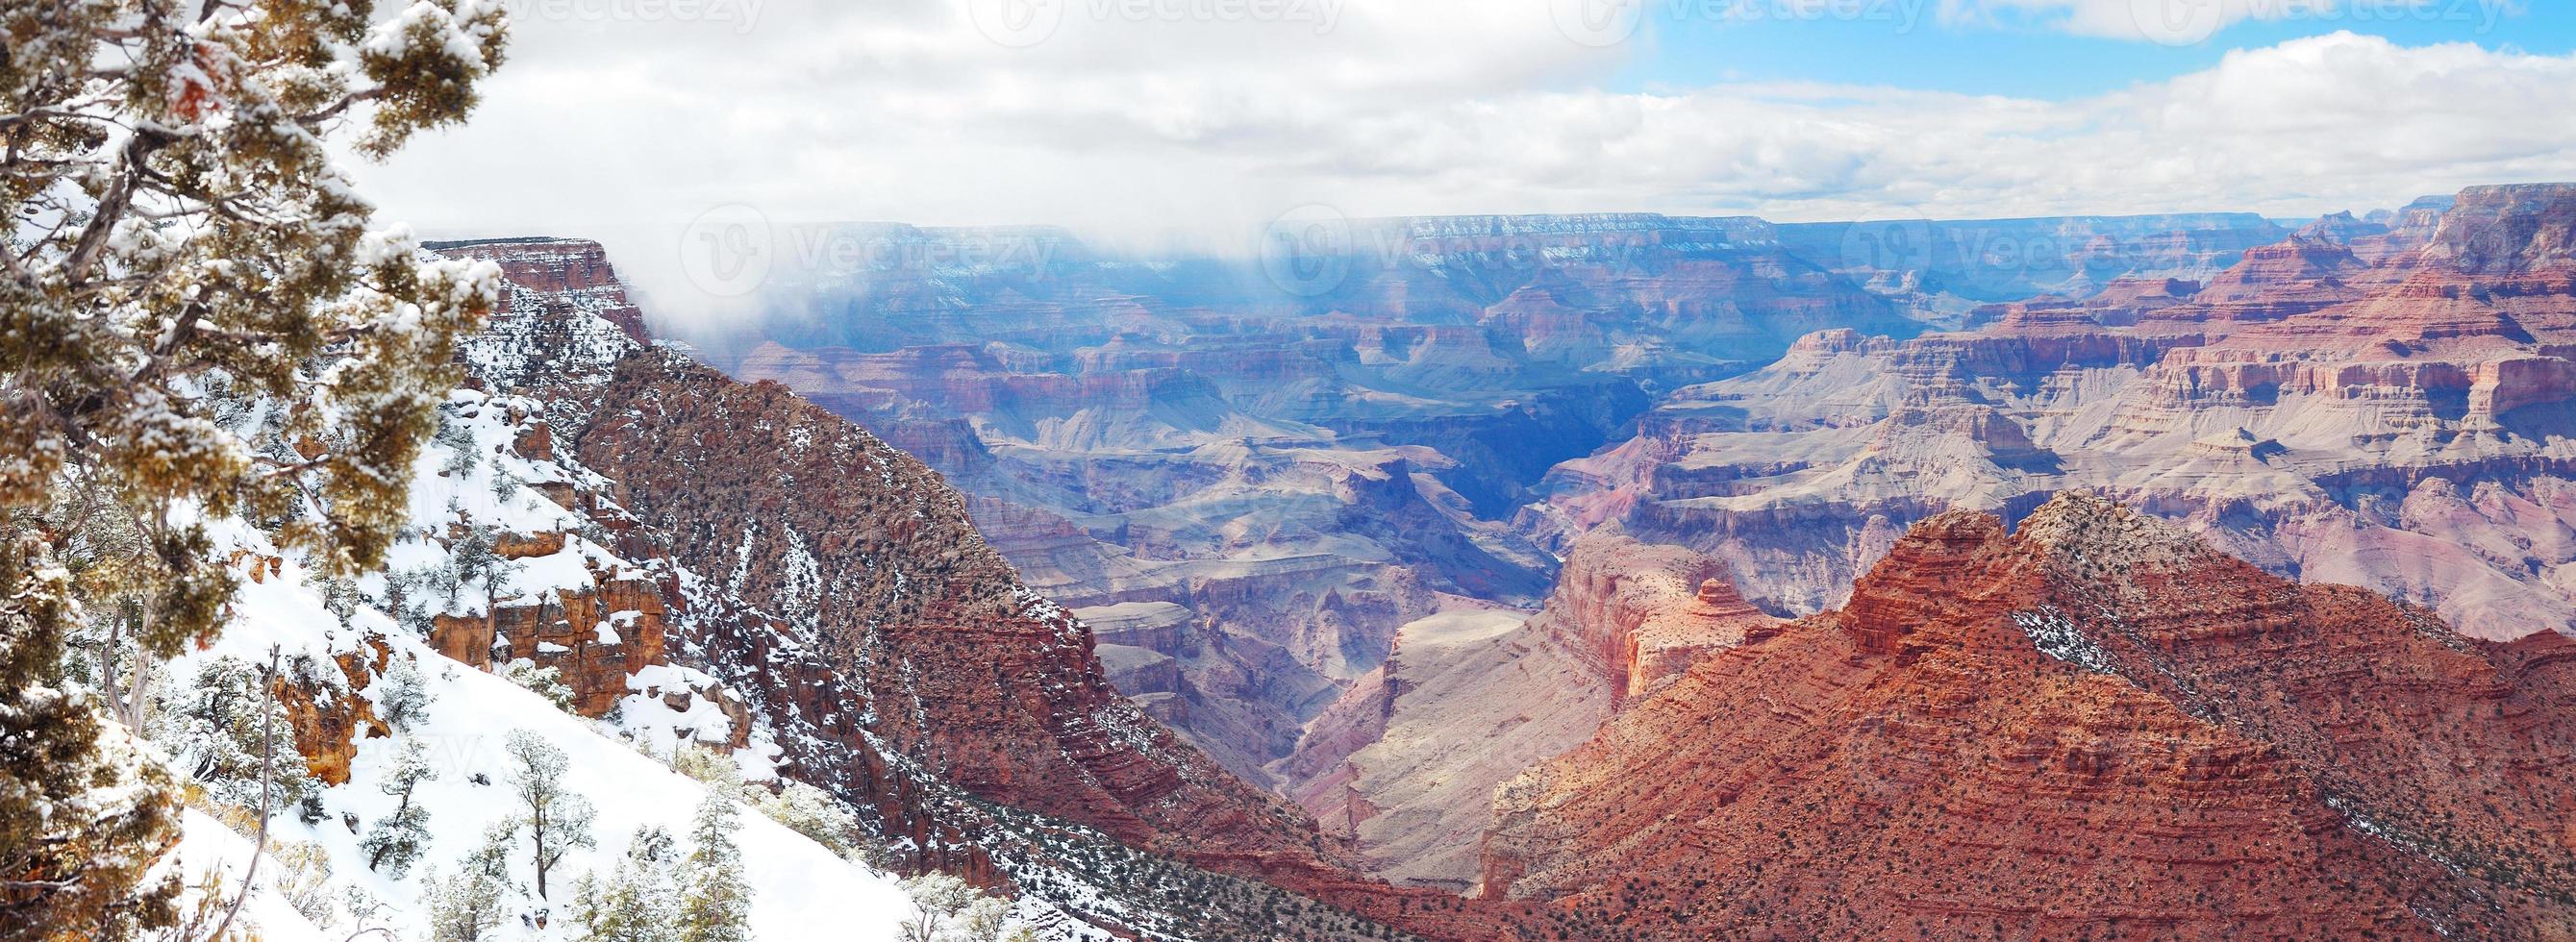 grand canyon panoramablick im winter mit schnee foto